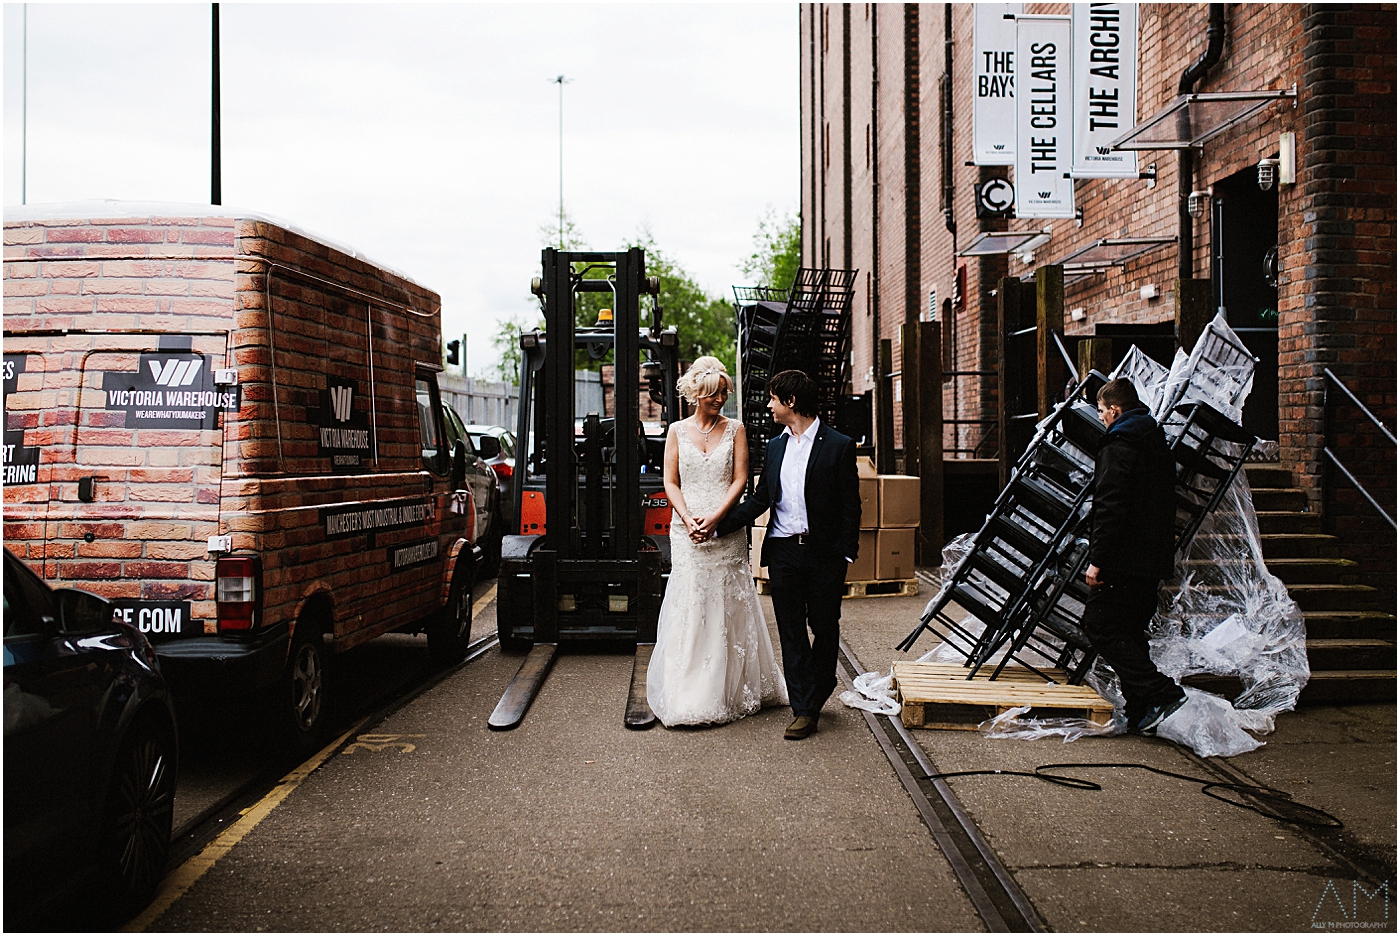 Documentary wedding photographer in Manchester